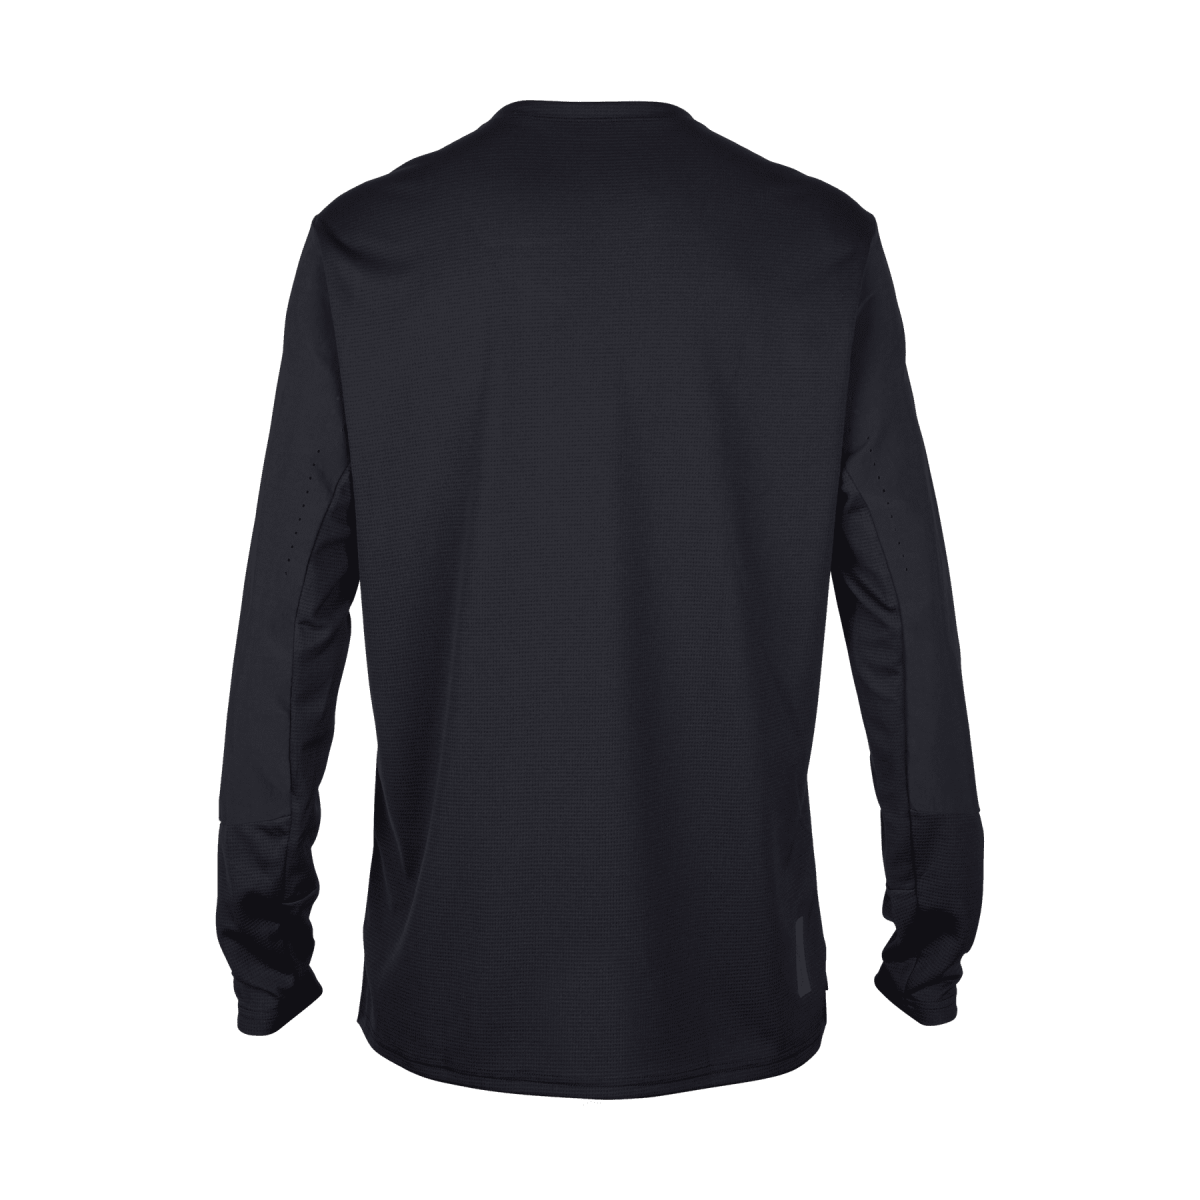 Camiseta manga larga Fox Defend en color negro para mtb enduro, ebike o descenso|32367